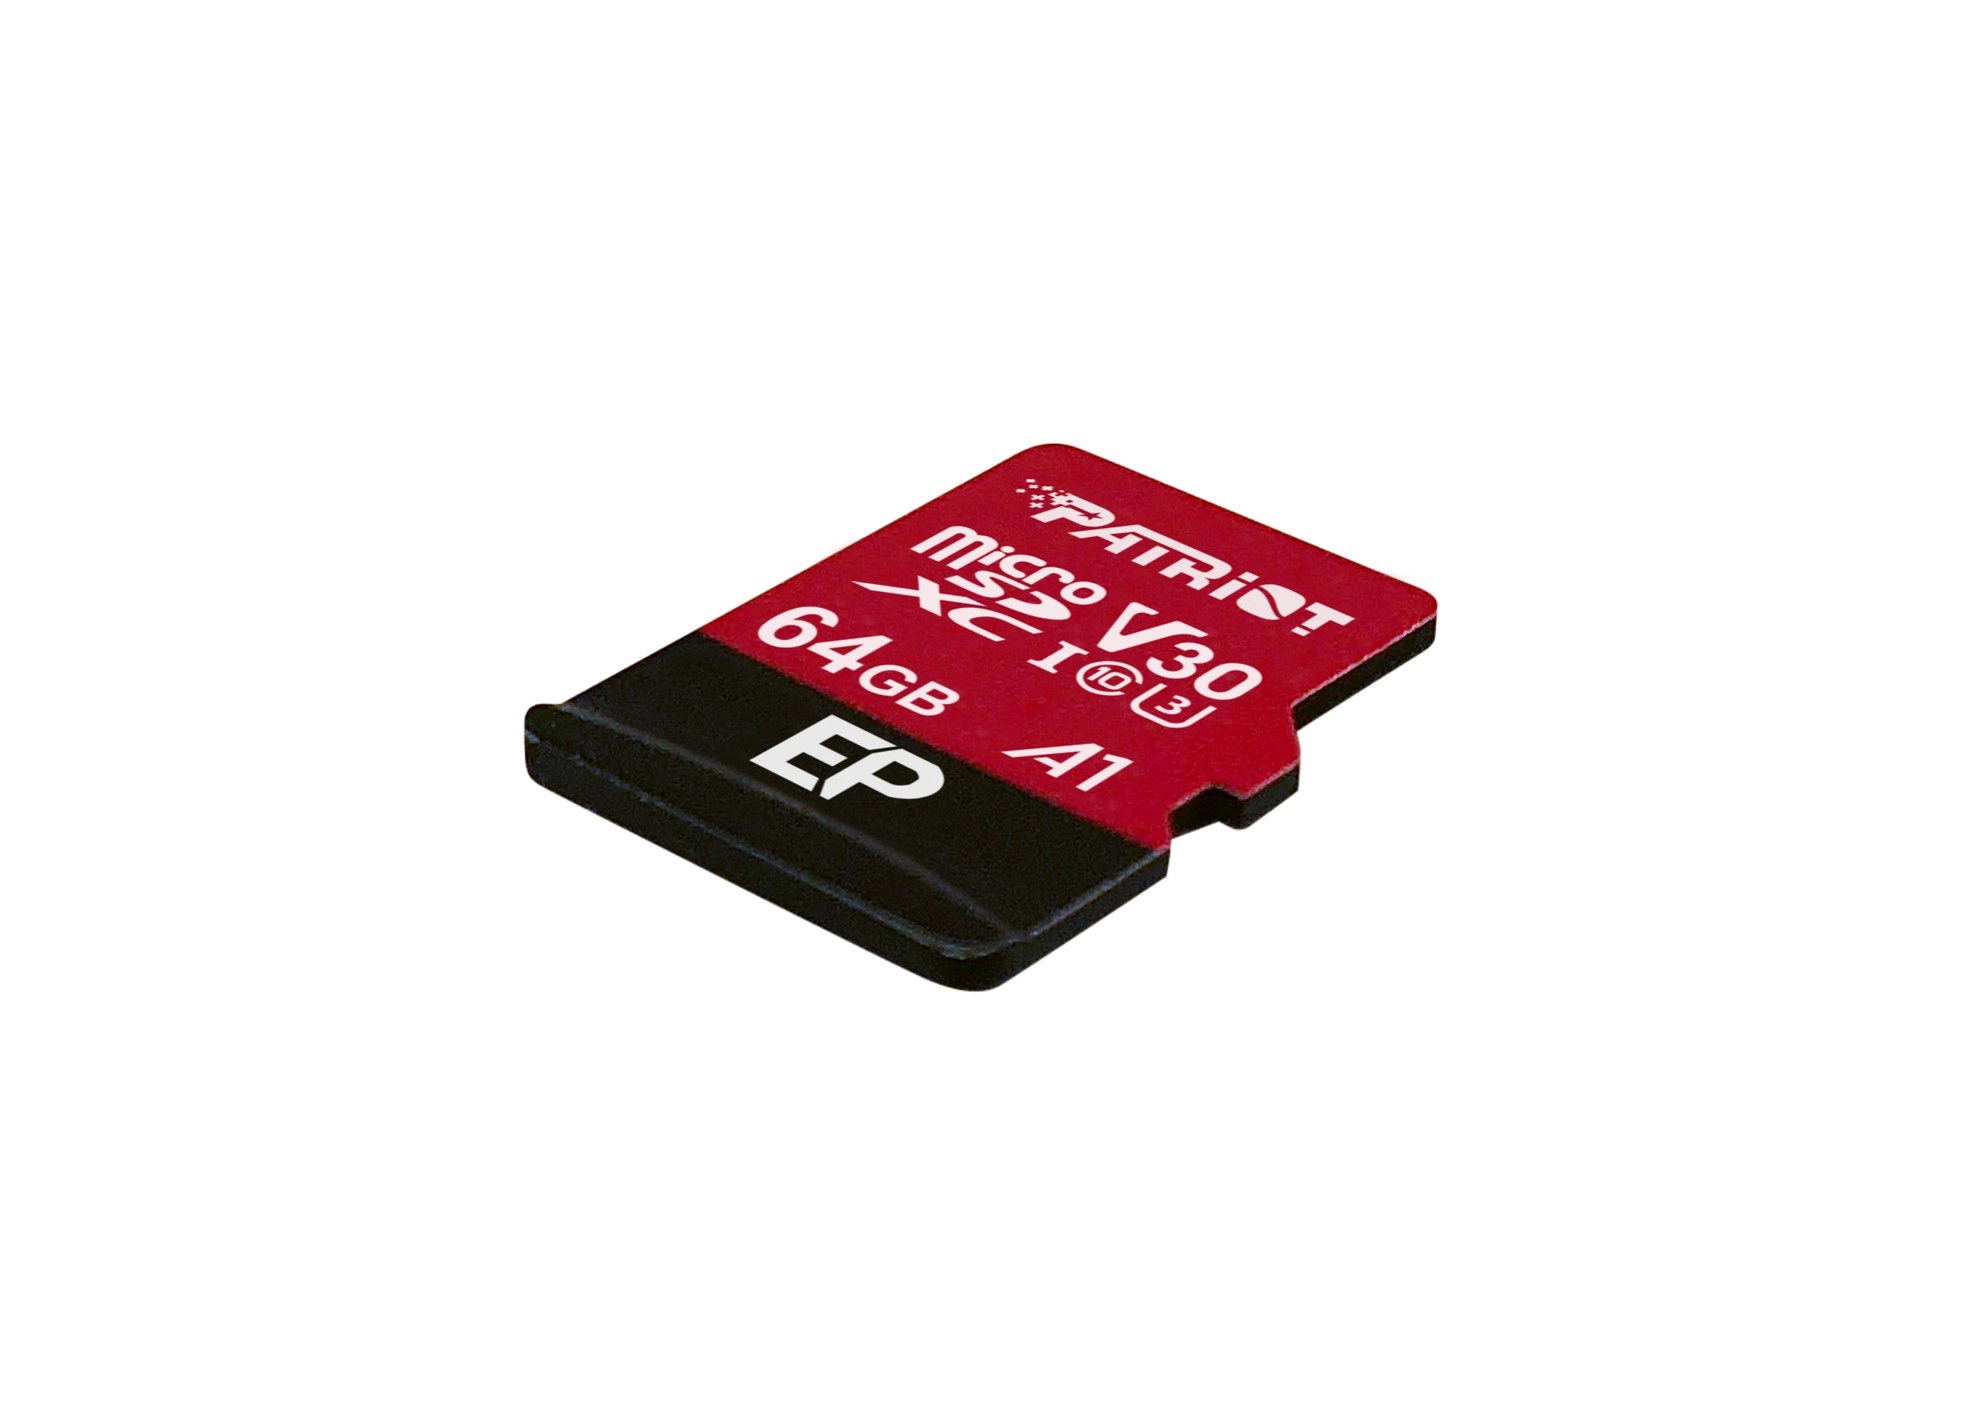 Patriot microSDXC 64GB karta + adaptér